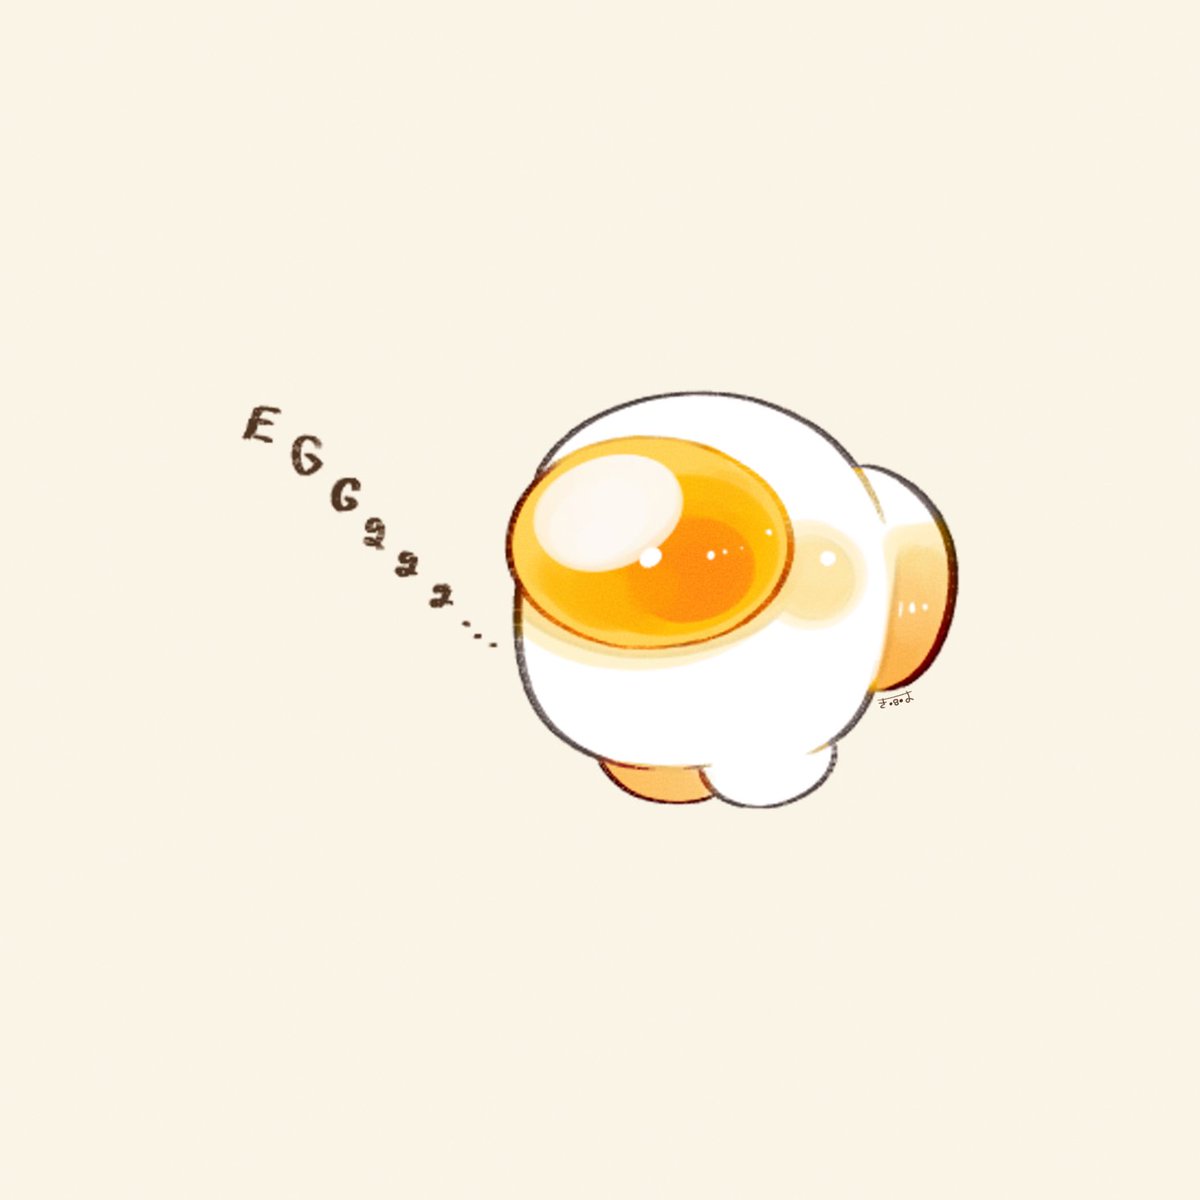 crewmate (among us) no humans egg (food) fried egg simple background negative space food signature  illustration images